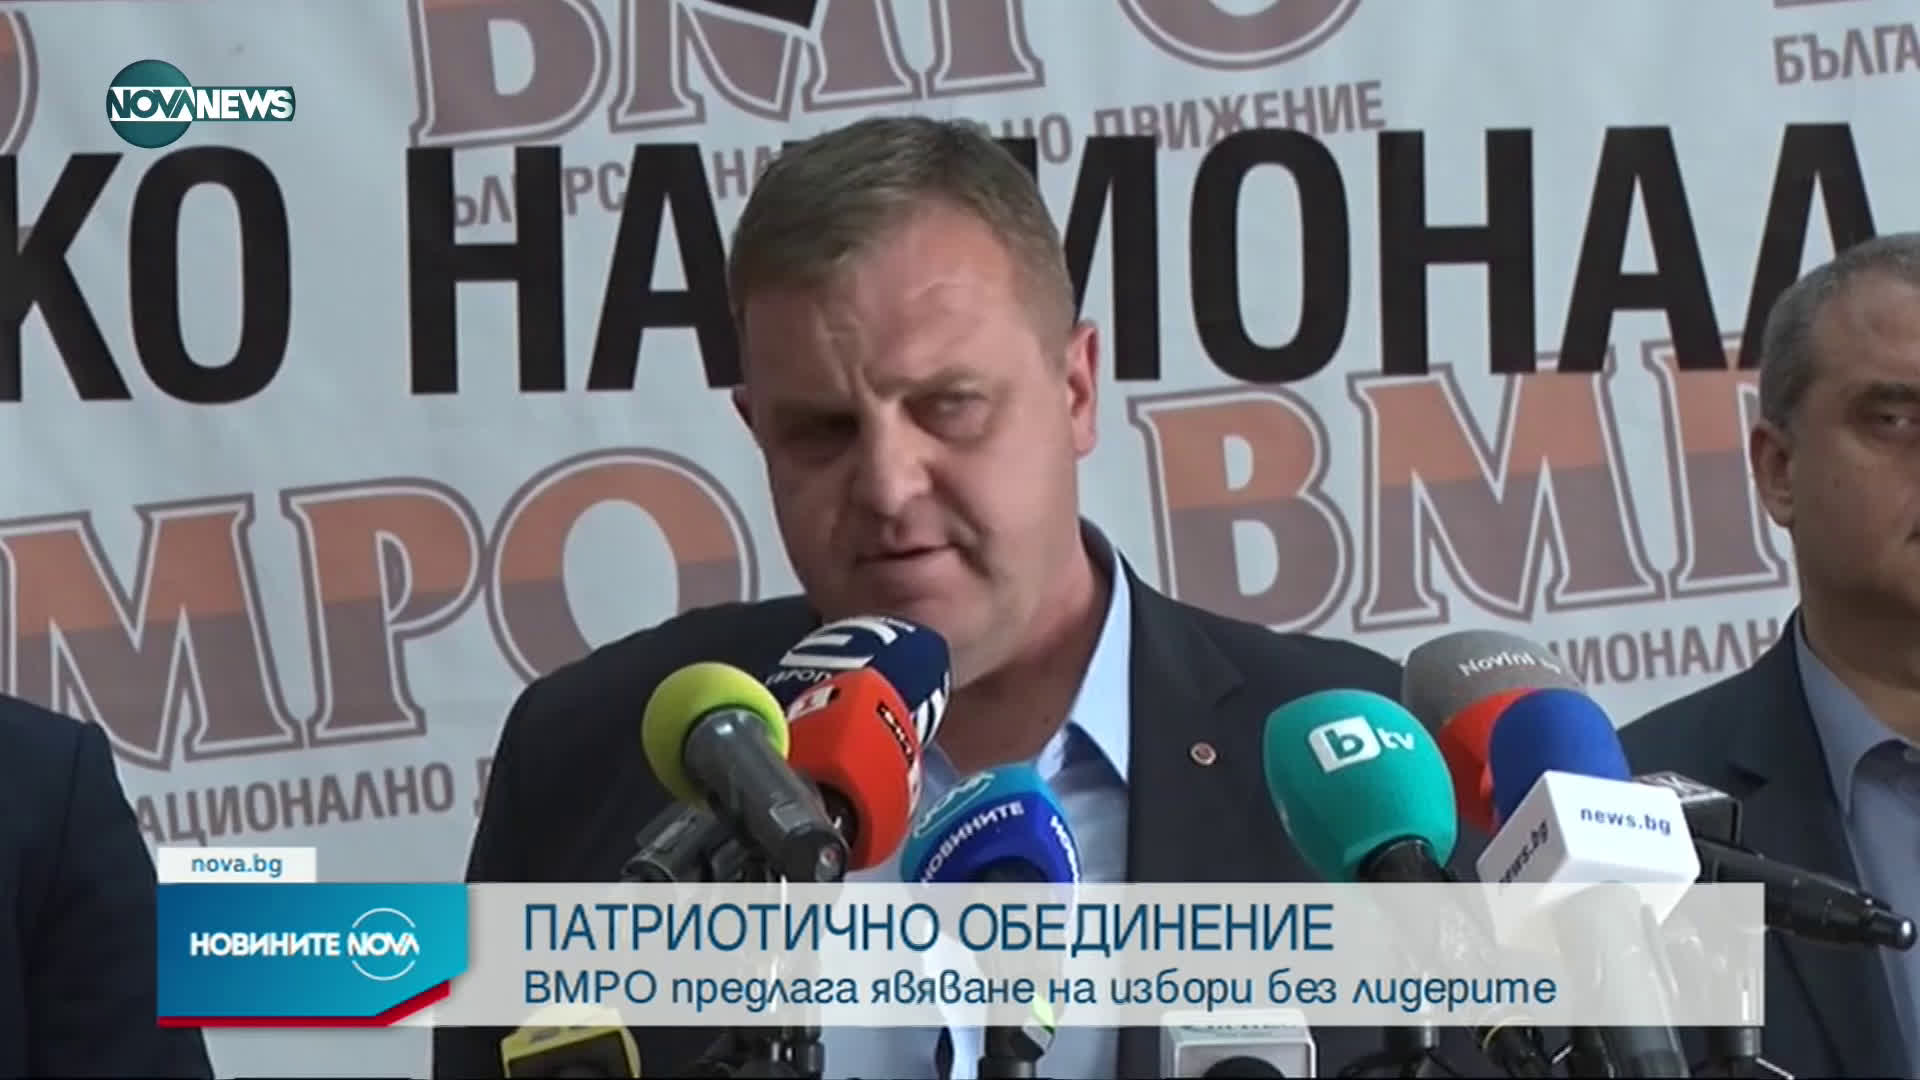 ВМРО предложи обединение на патриотичните формации